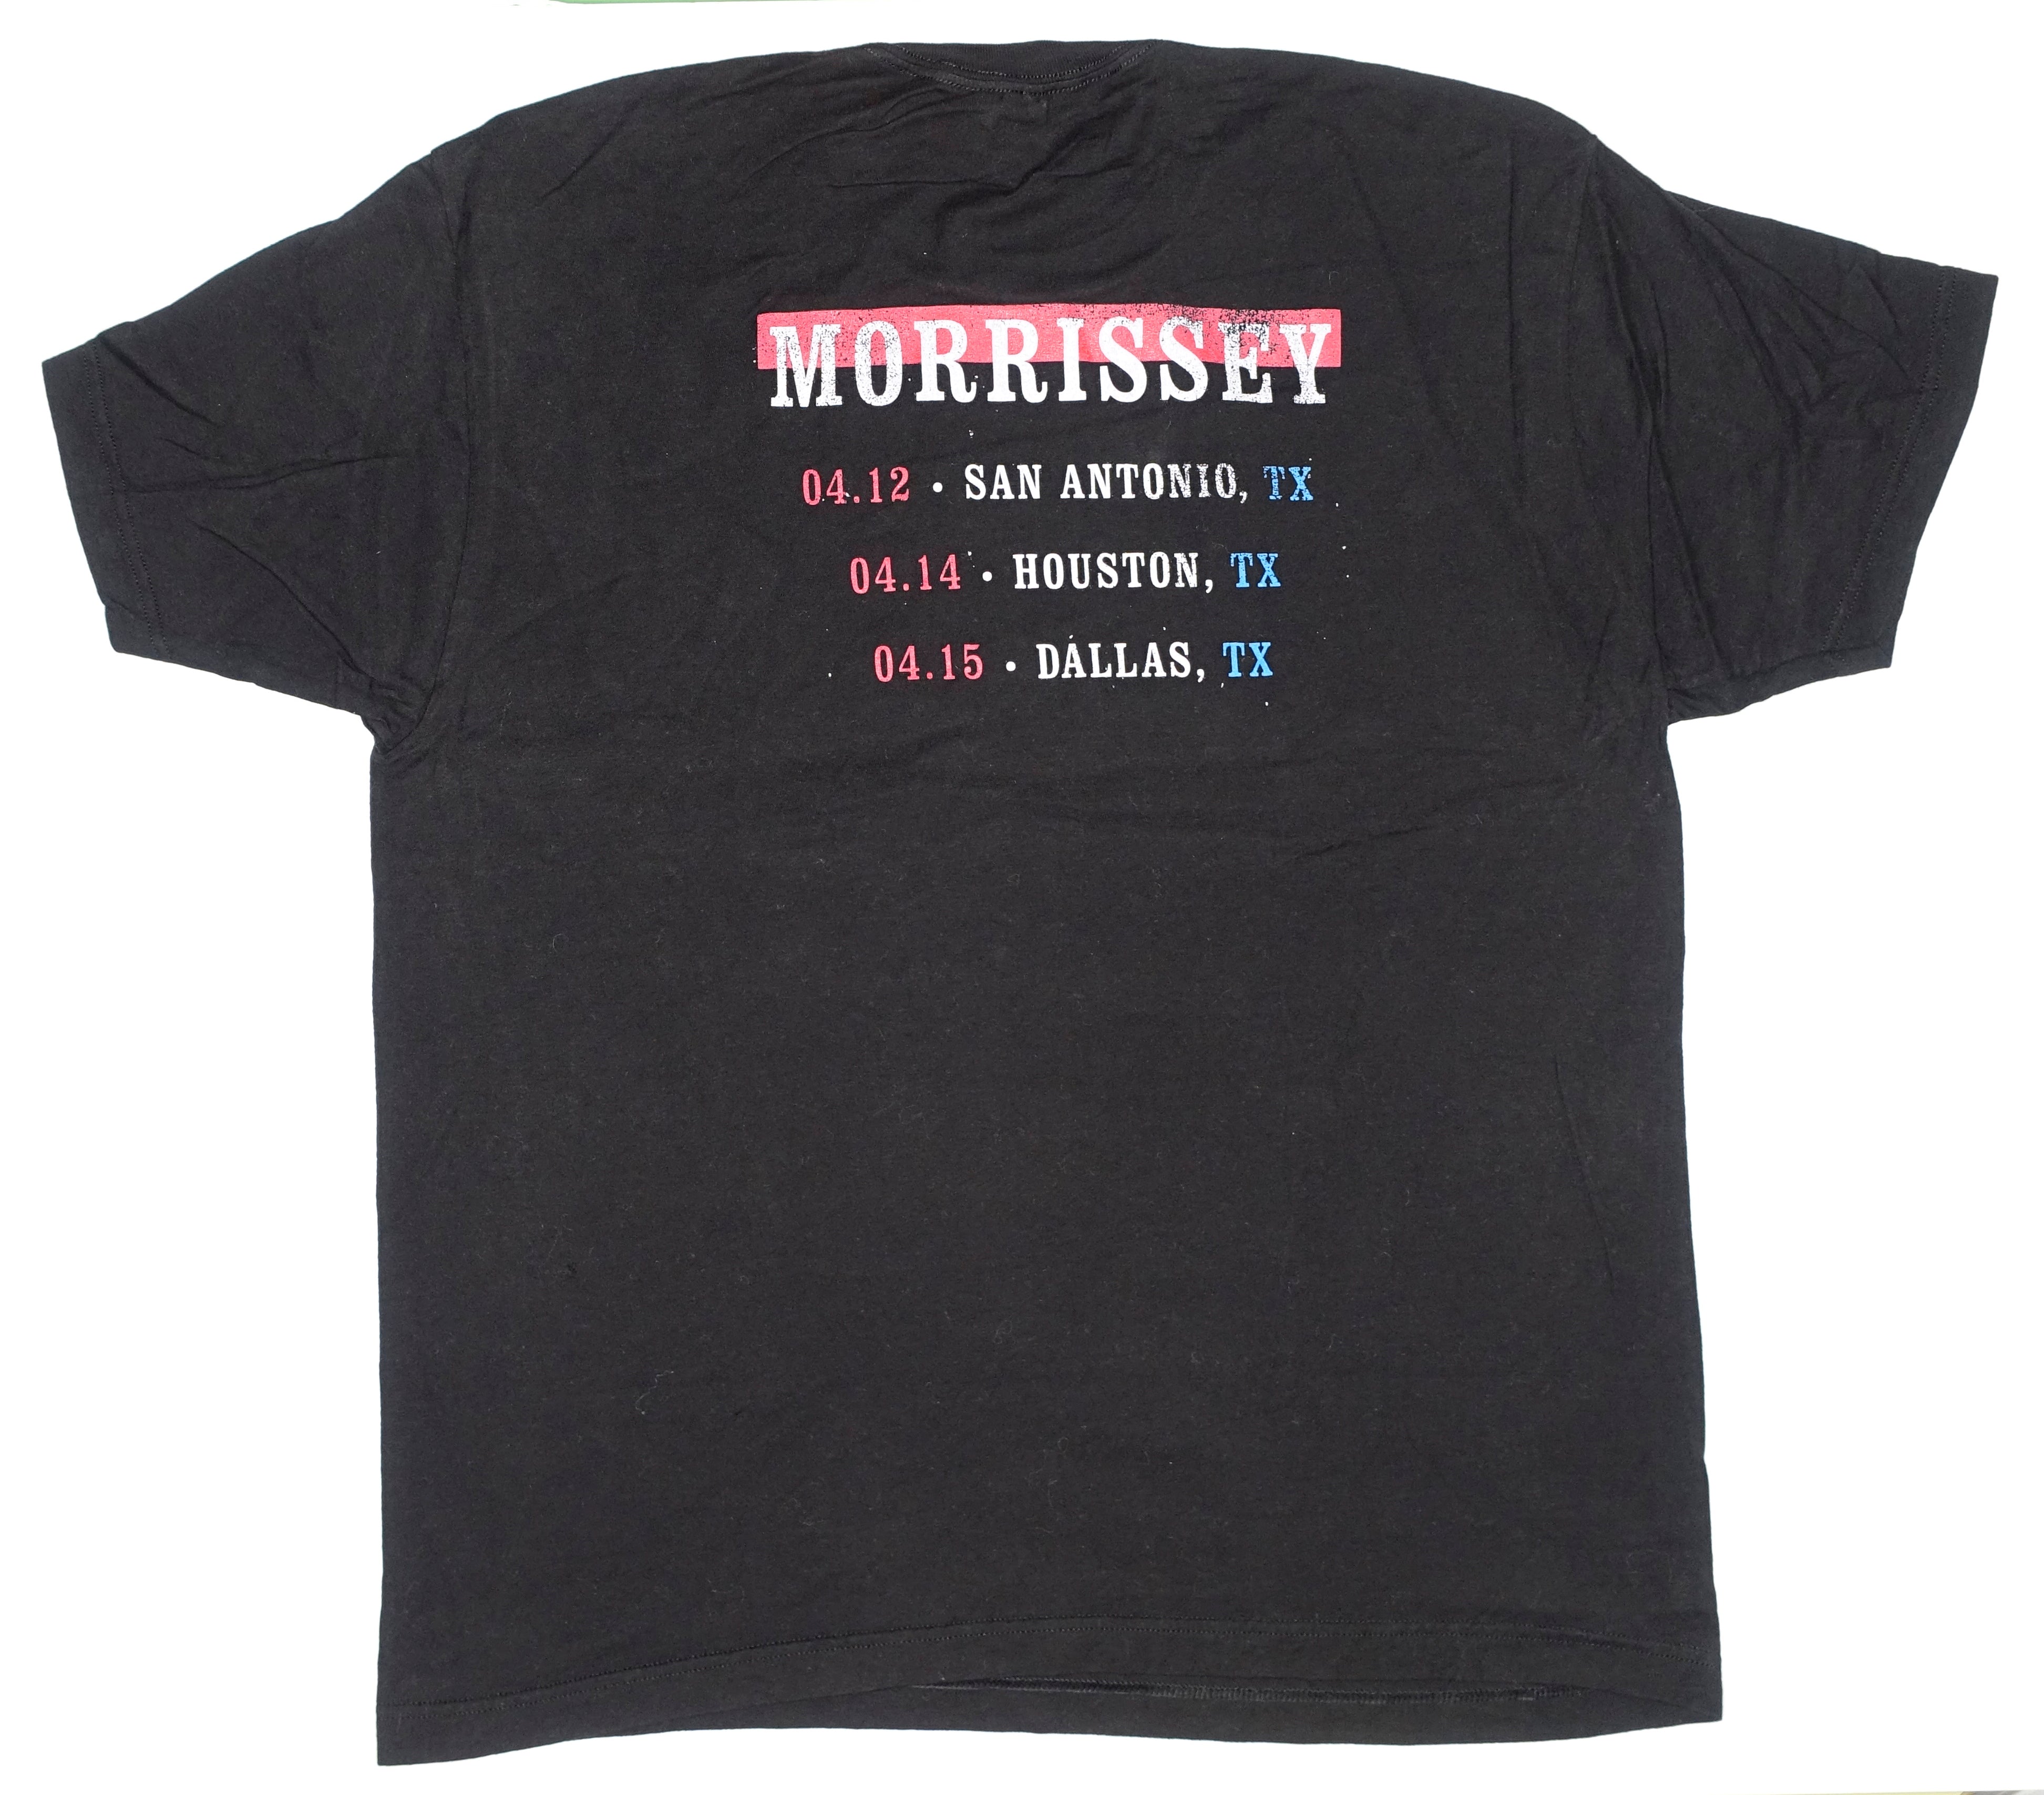 Morrissey - Don't Mess With Morrissey 2007 TX Tour Shirt Size XL